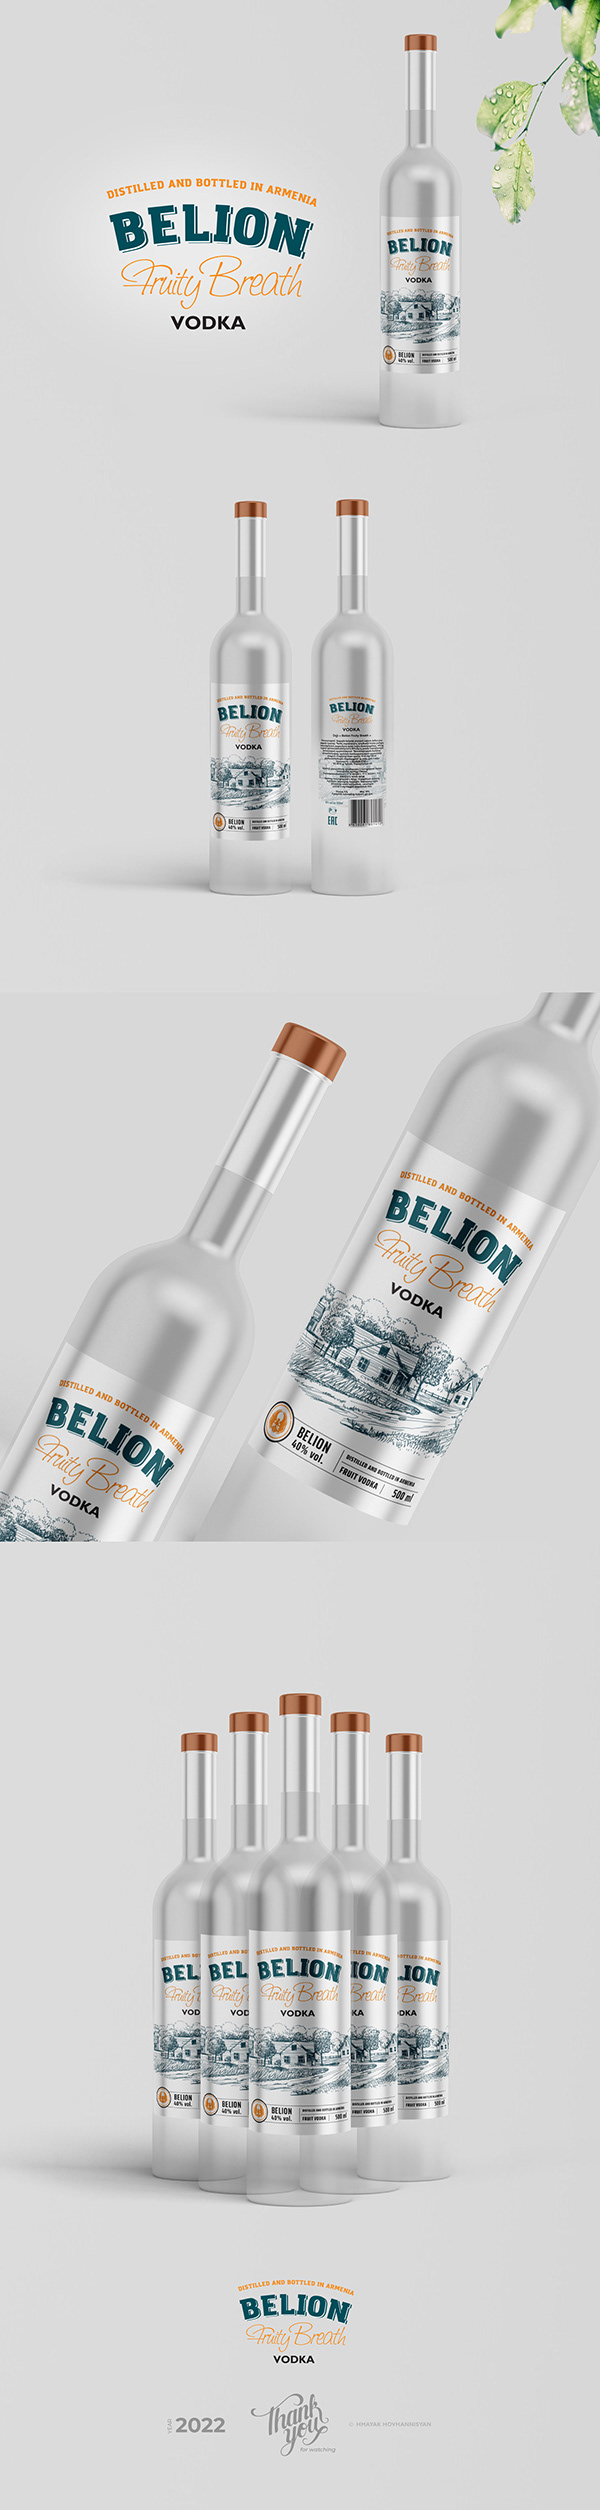 BELION Vodka